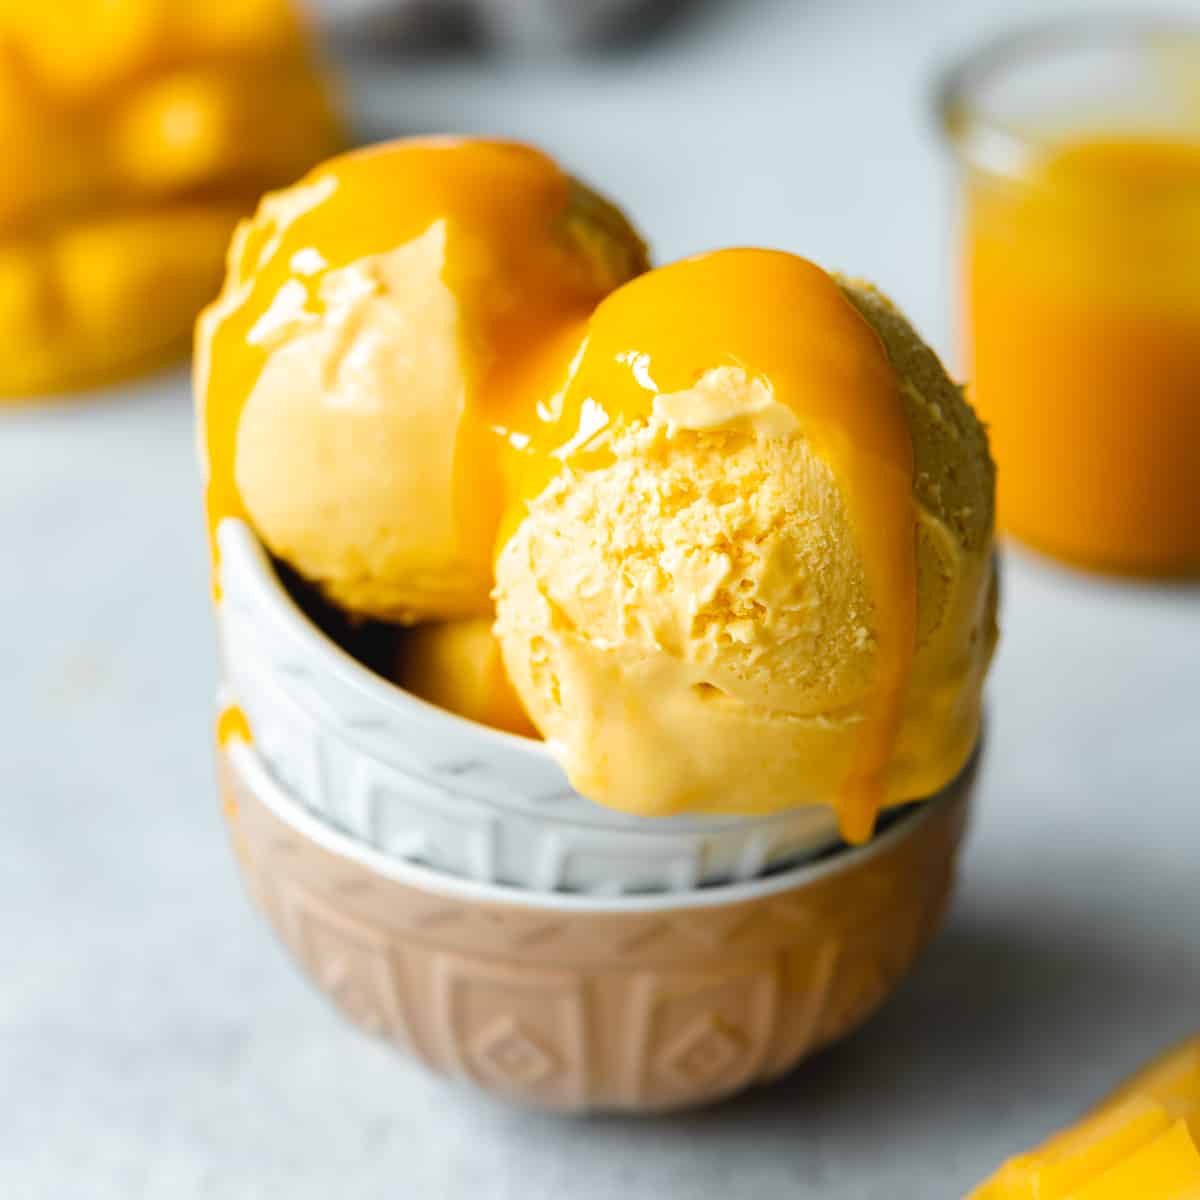 Homemade Mango Ice Cream Recipe (No Ice Cream Maker!)